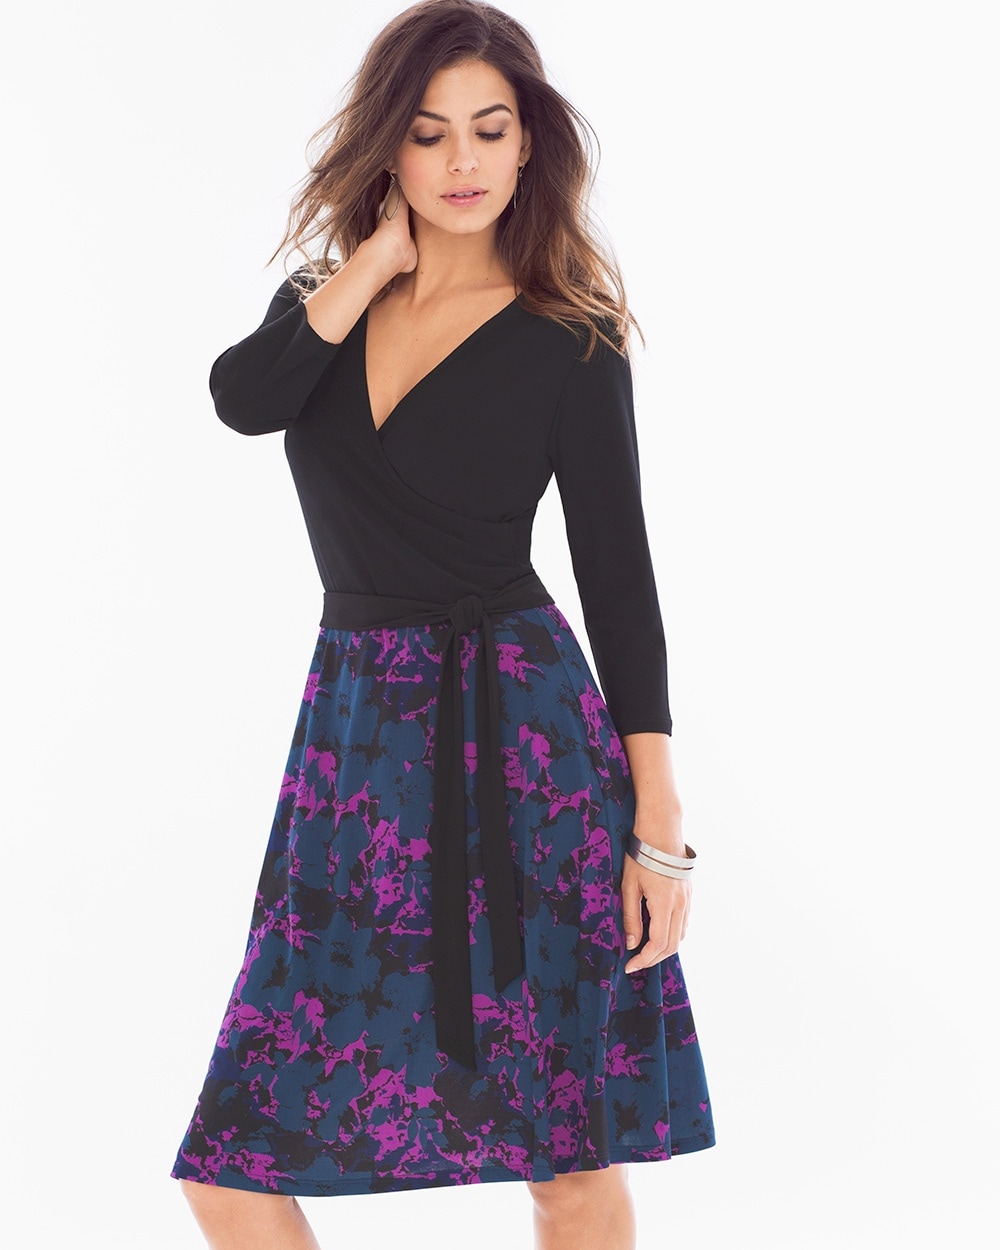 Leota Wrap Front Short Dress Black/Raven Floral